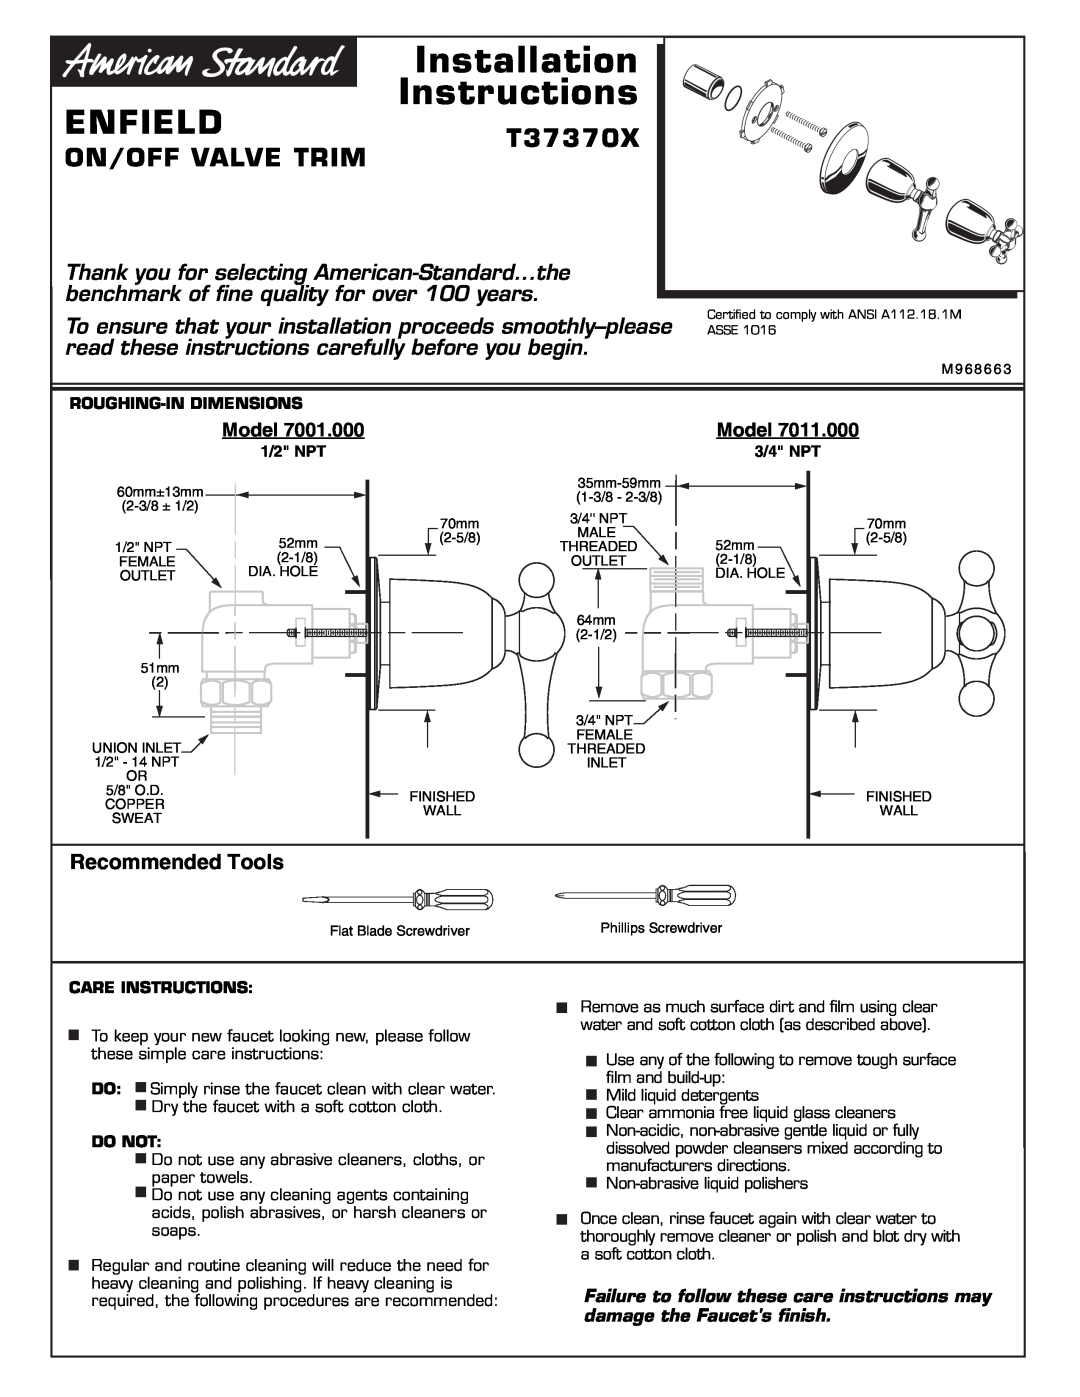 American Standard M968663 installation instructions Enfield, T37370X, On/Off Valve Trim, Installation, Instructions 